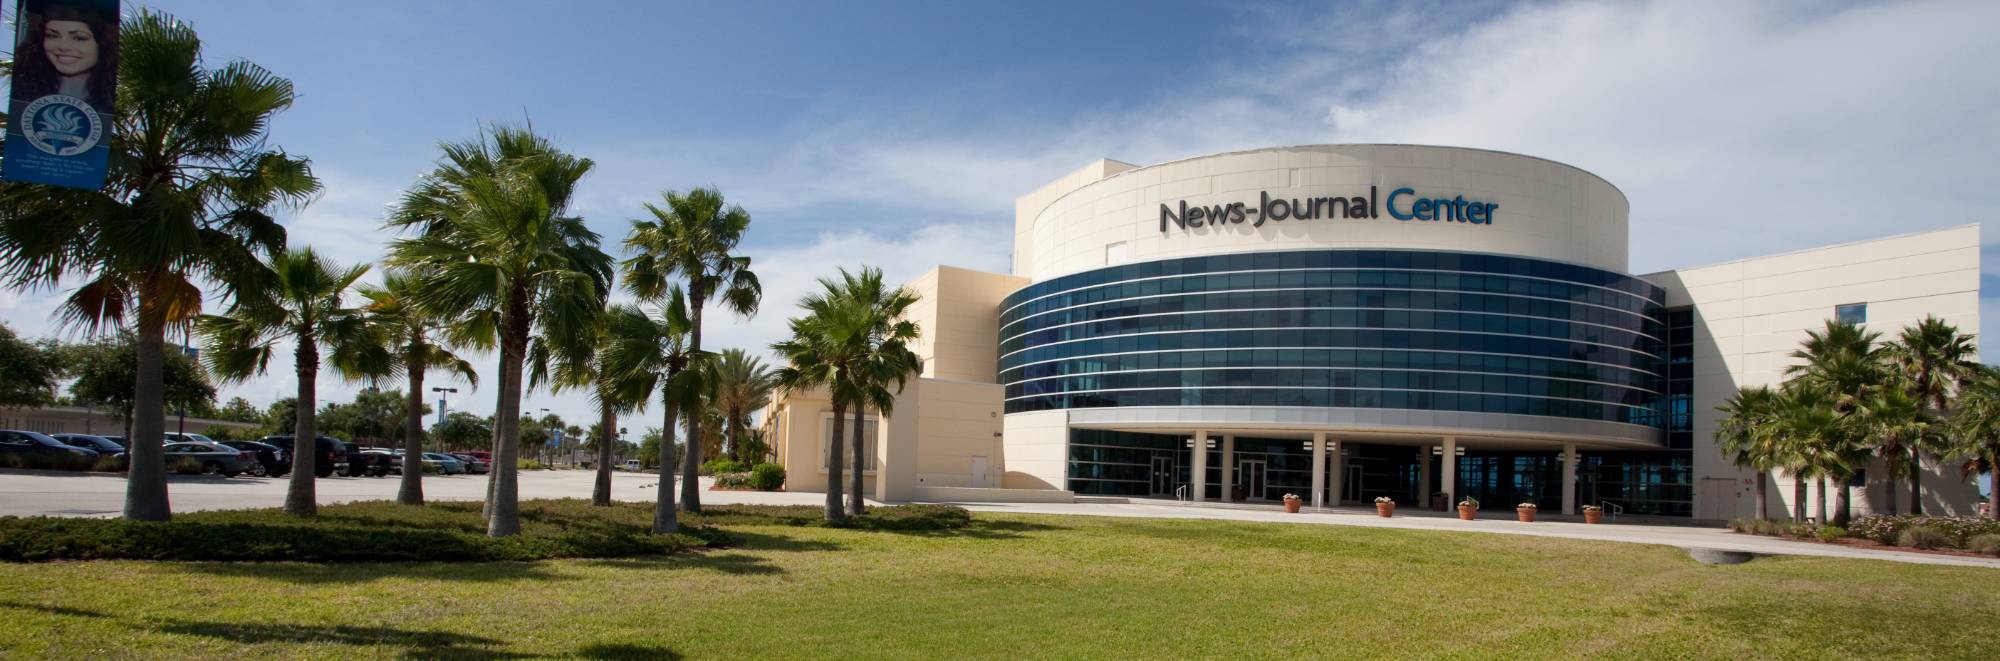 the News Journal Center building in Daytona Beach, FL 